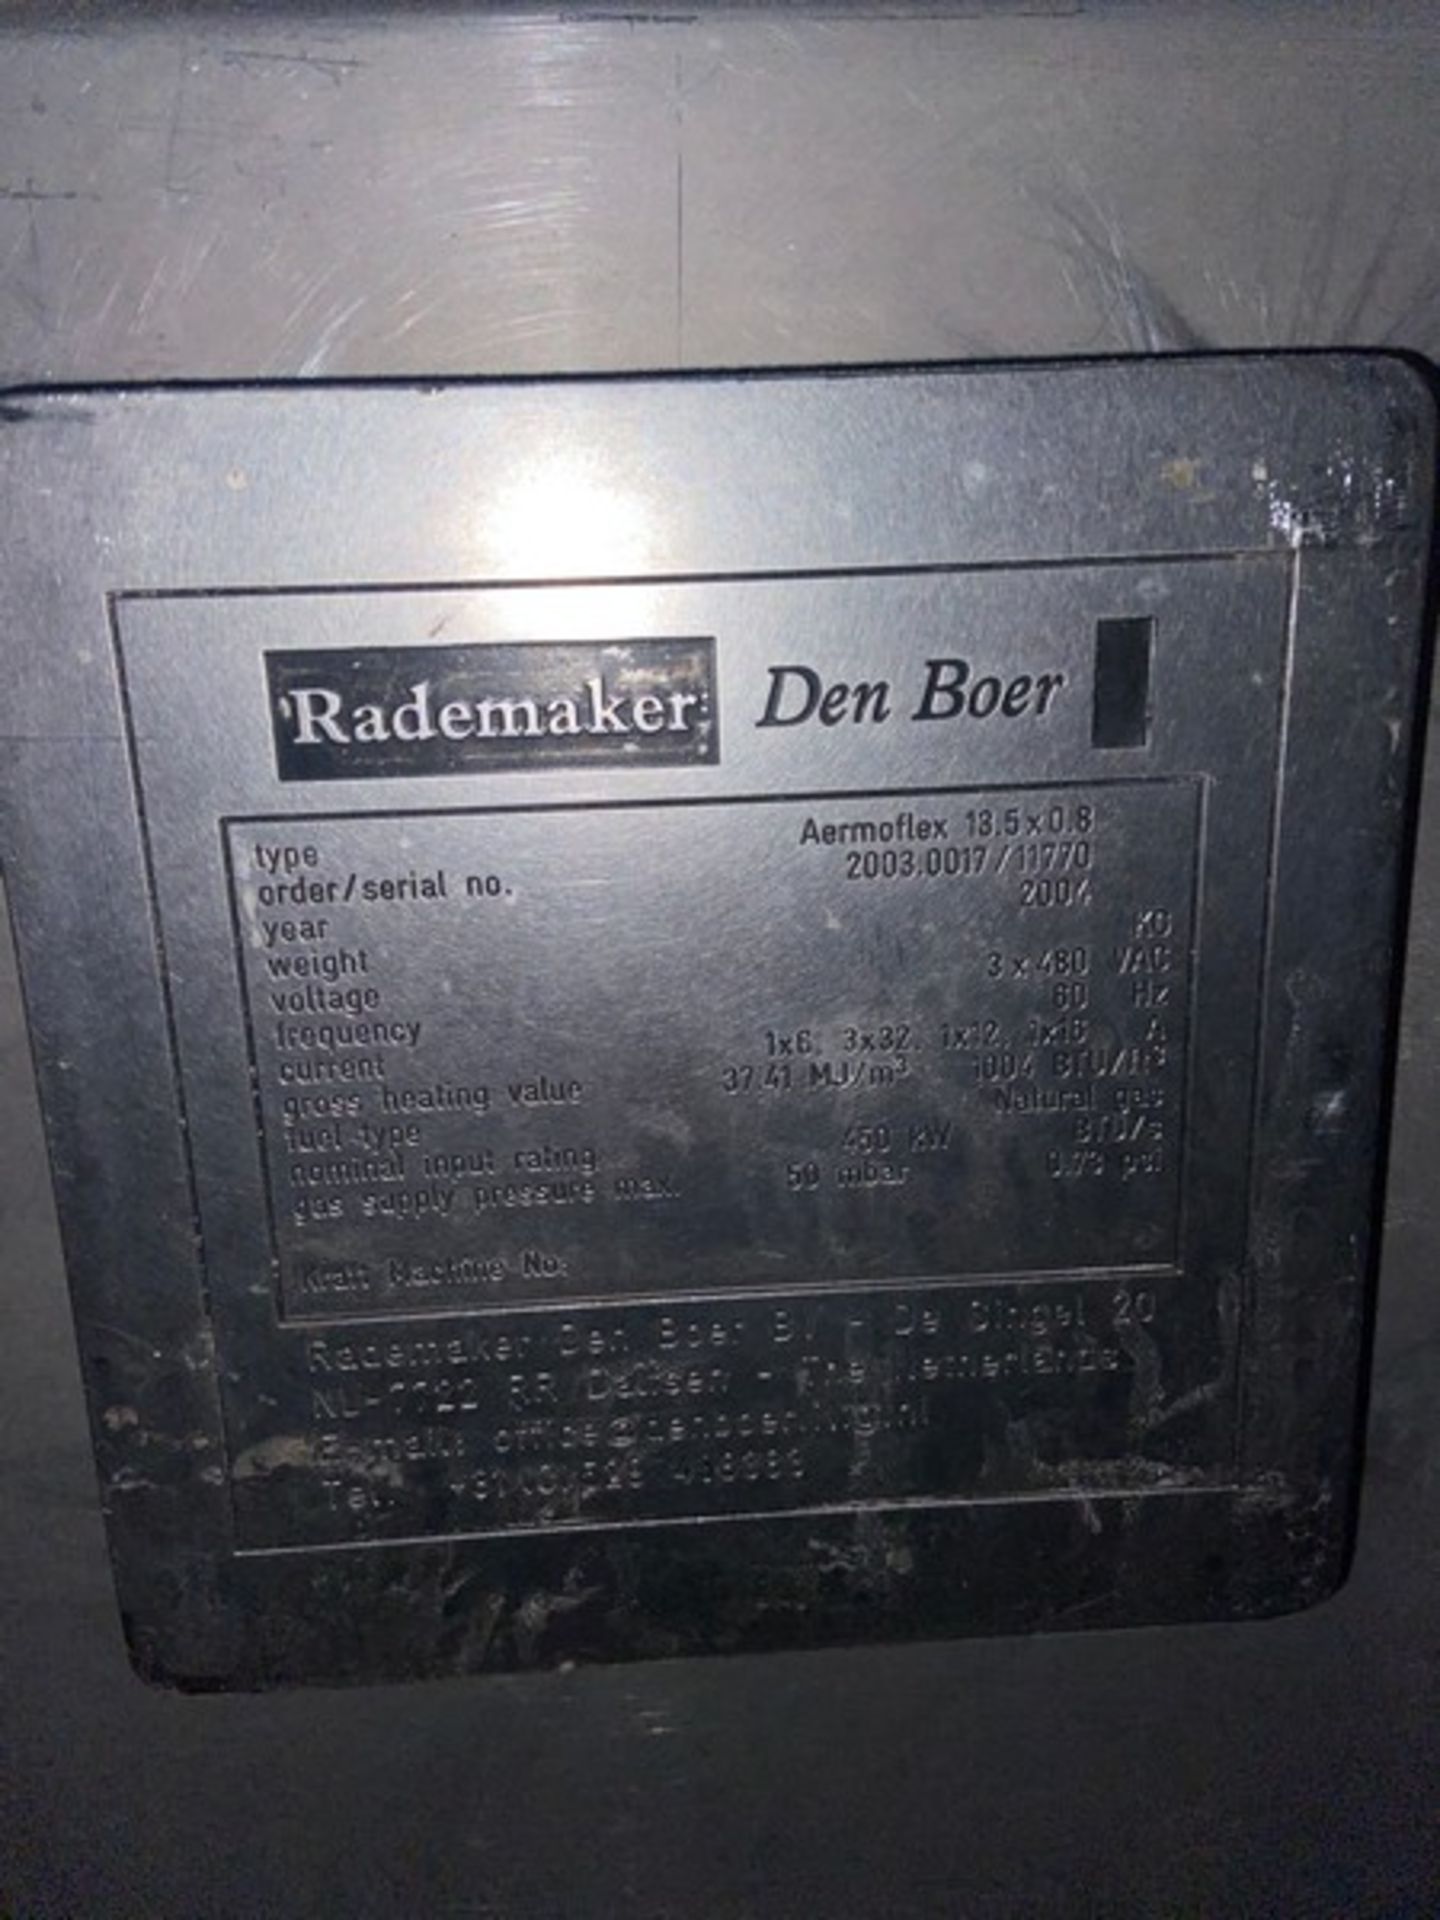 Rademaker Den Boer Aermoflex S/S Oven, with Allen-Bradley PanelView 1000 Touchpad Display, with Mesh - Image 13 of 21